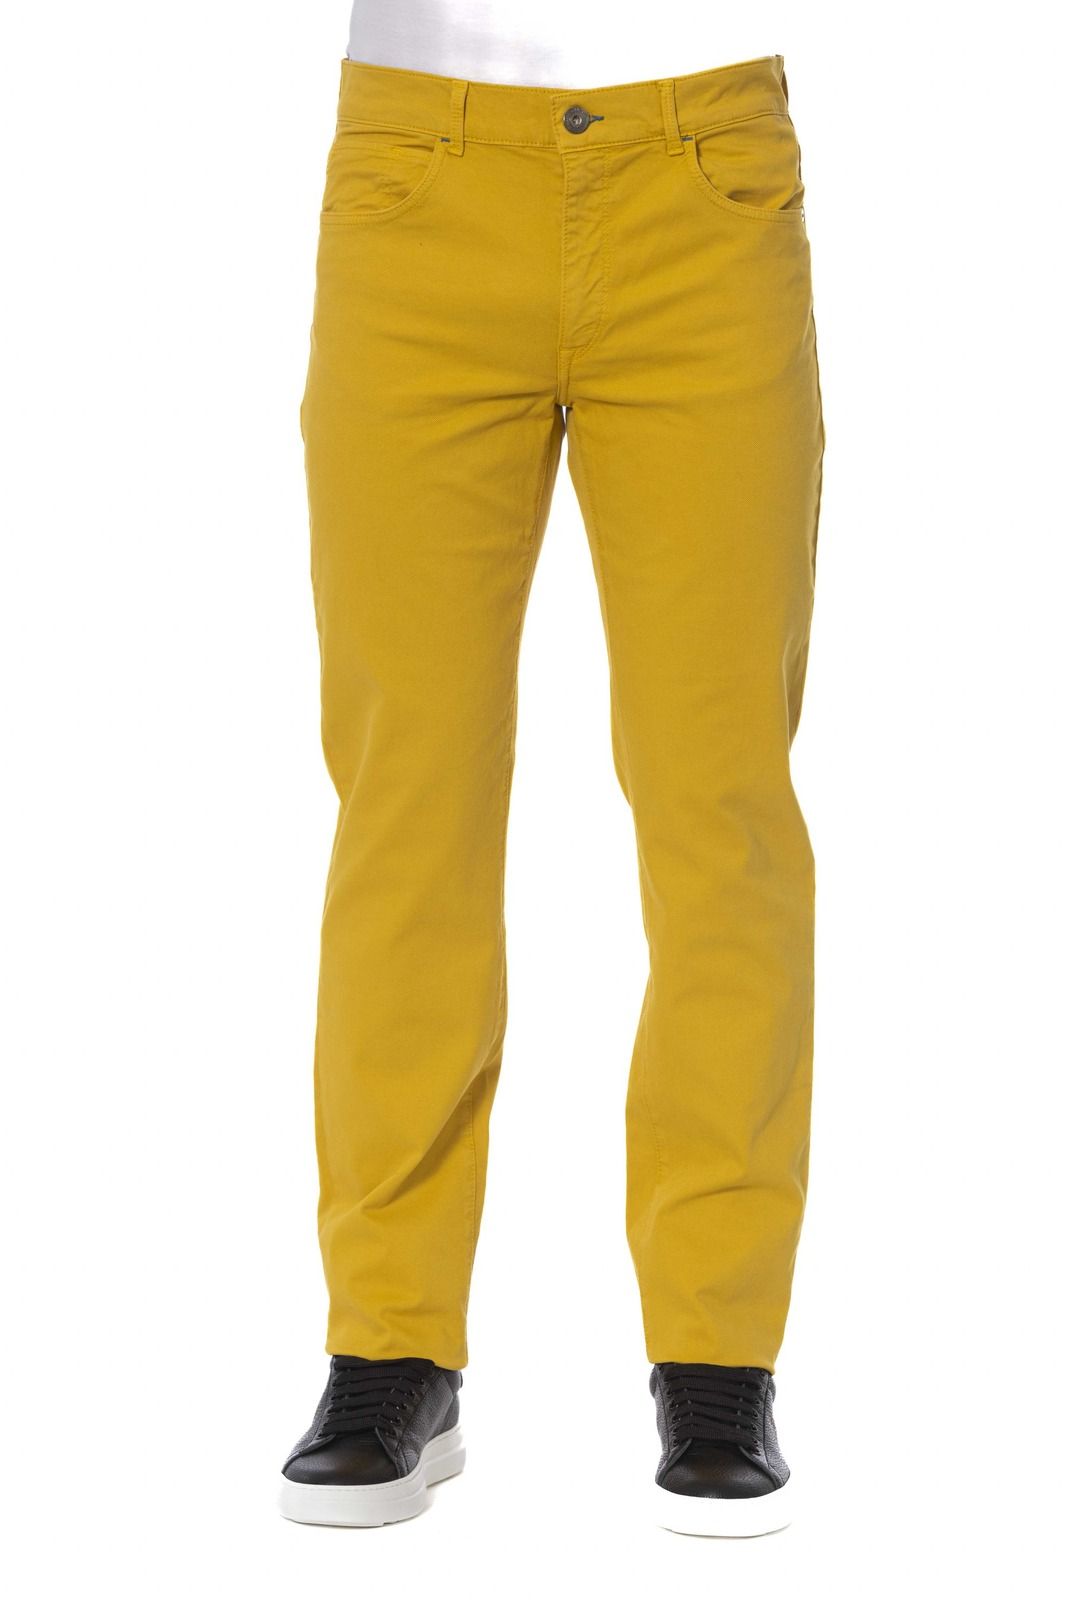 Trussardi Jeans 52J00004 1T002360 H 002 Barva: žlutá, Velikost: 29